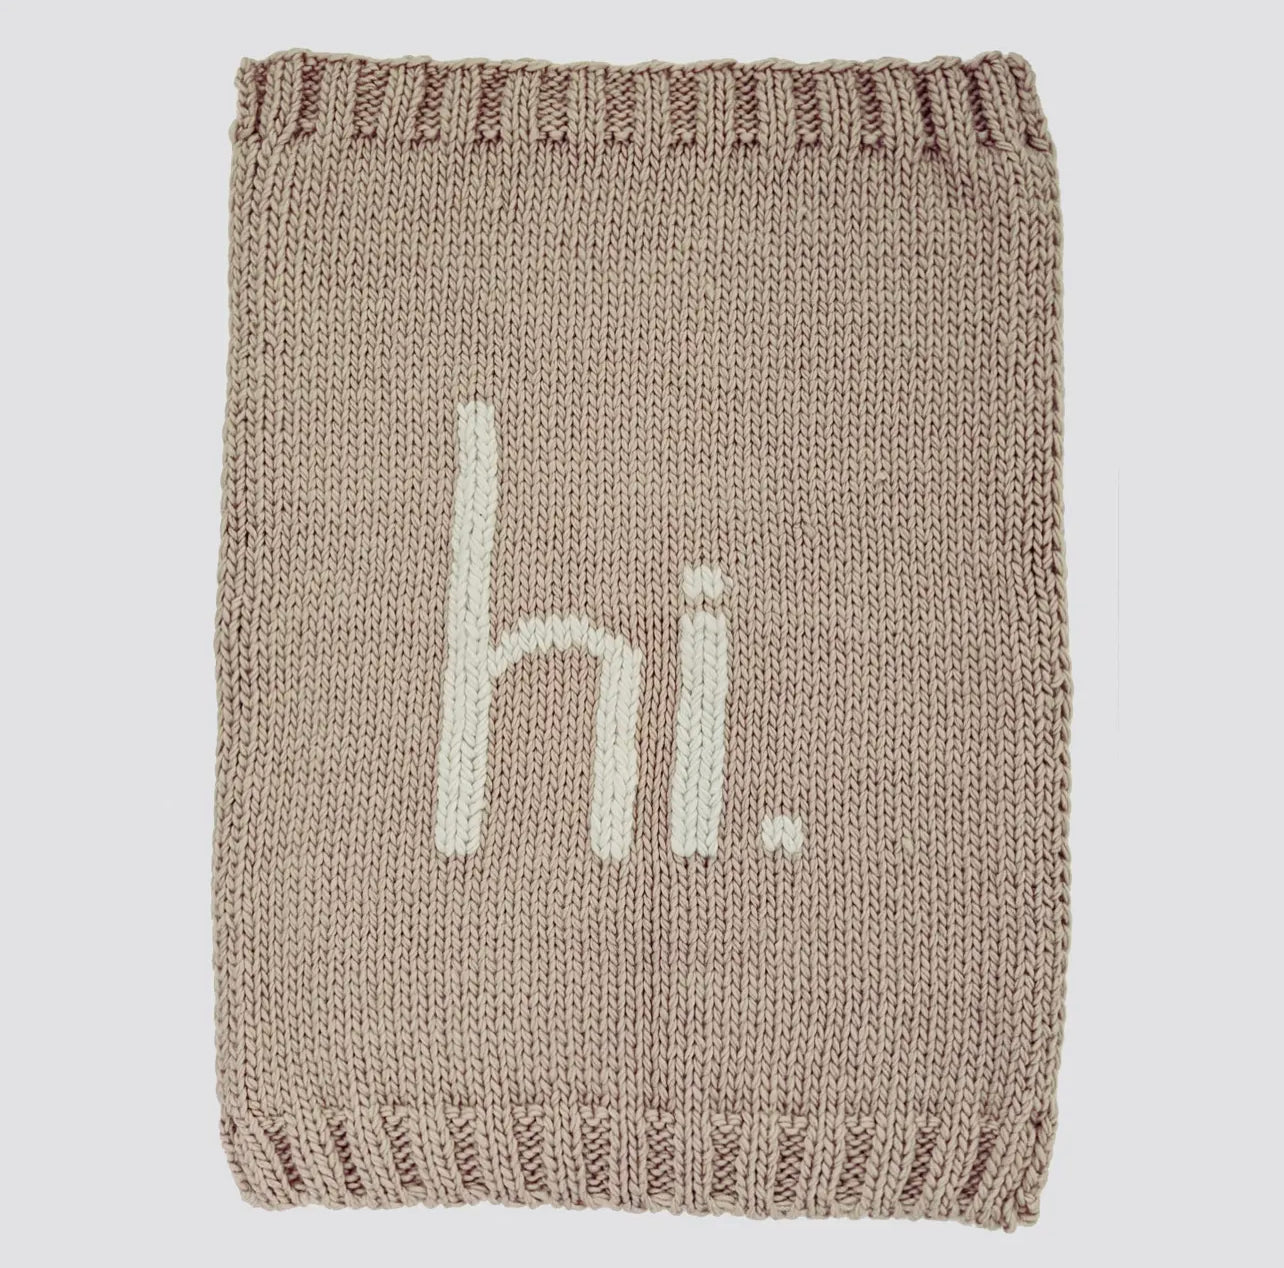 "Hi" Hand Knit Pebble Blanket